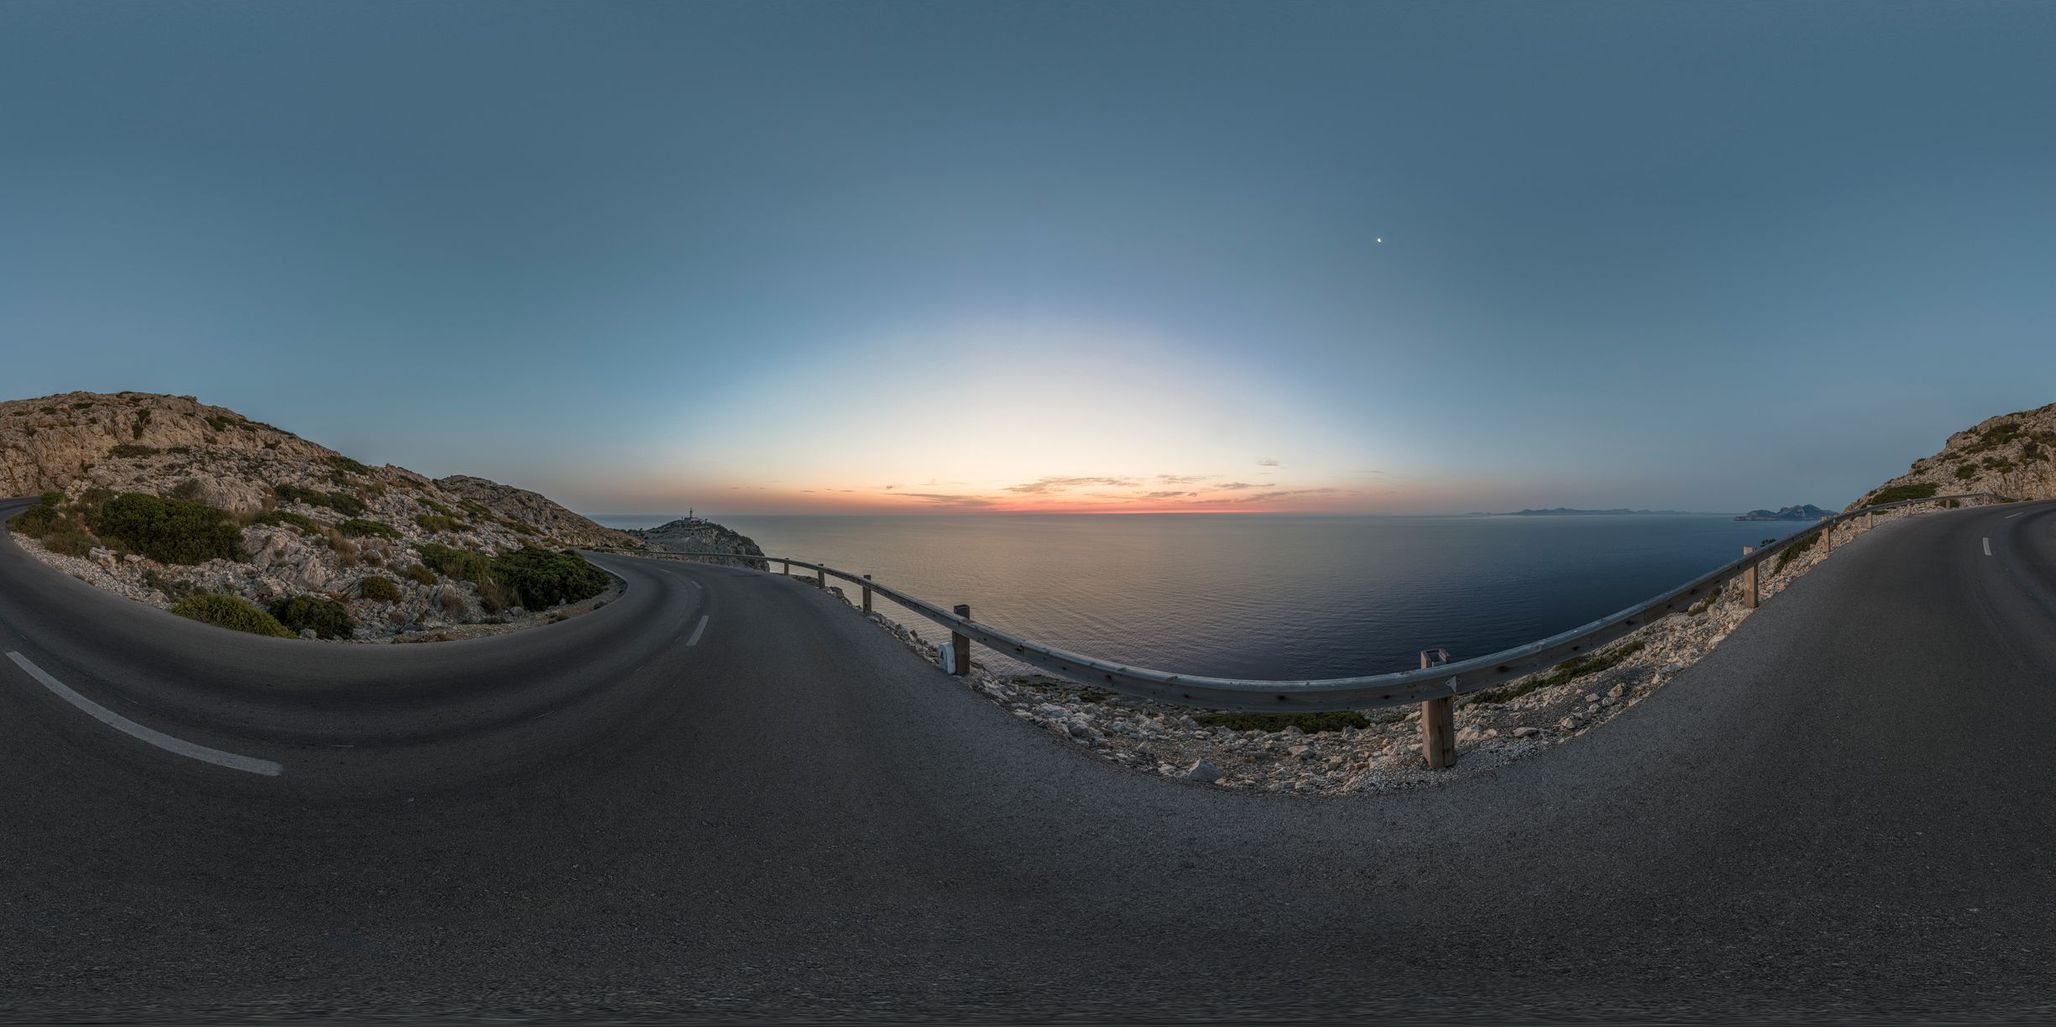 Coastal Road in Mallorca, Spain: Sunset Views and Small Harbor - HDRi ...